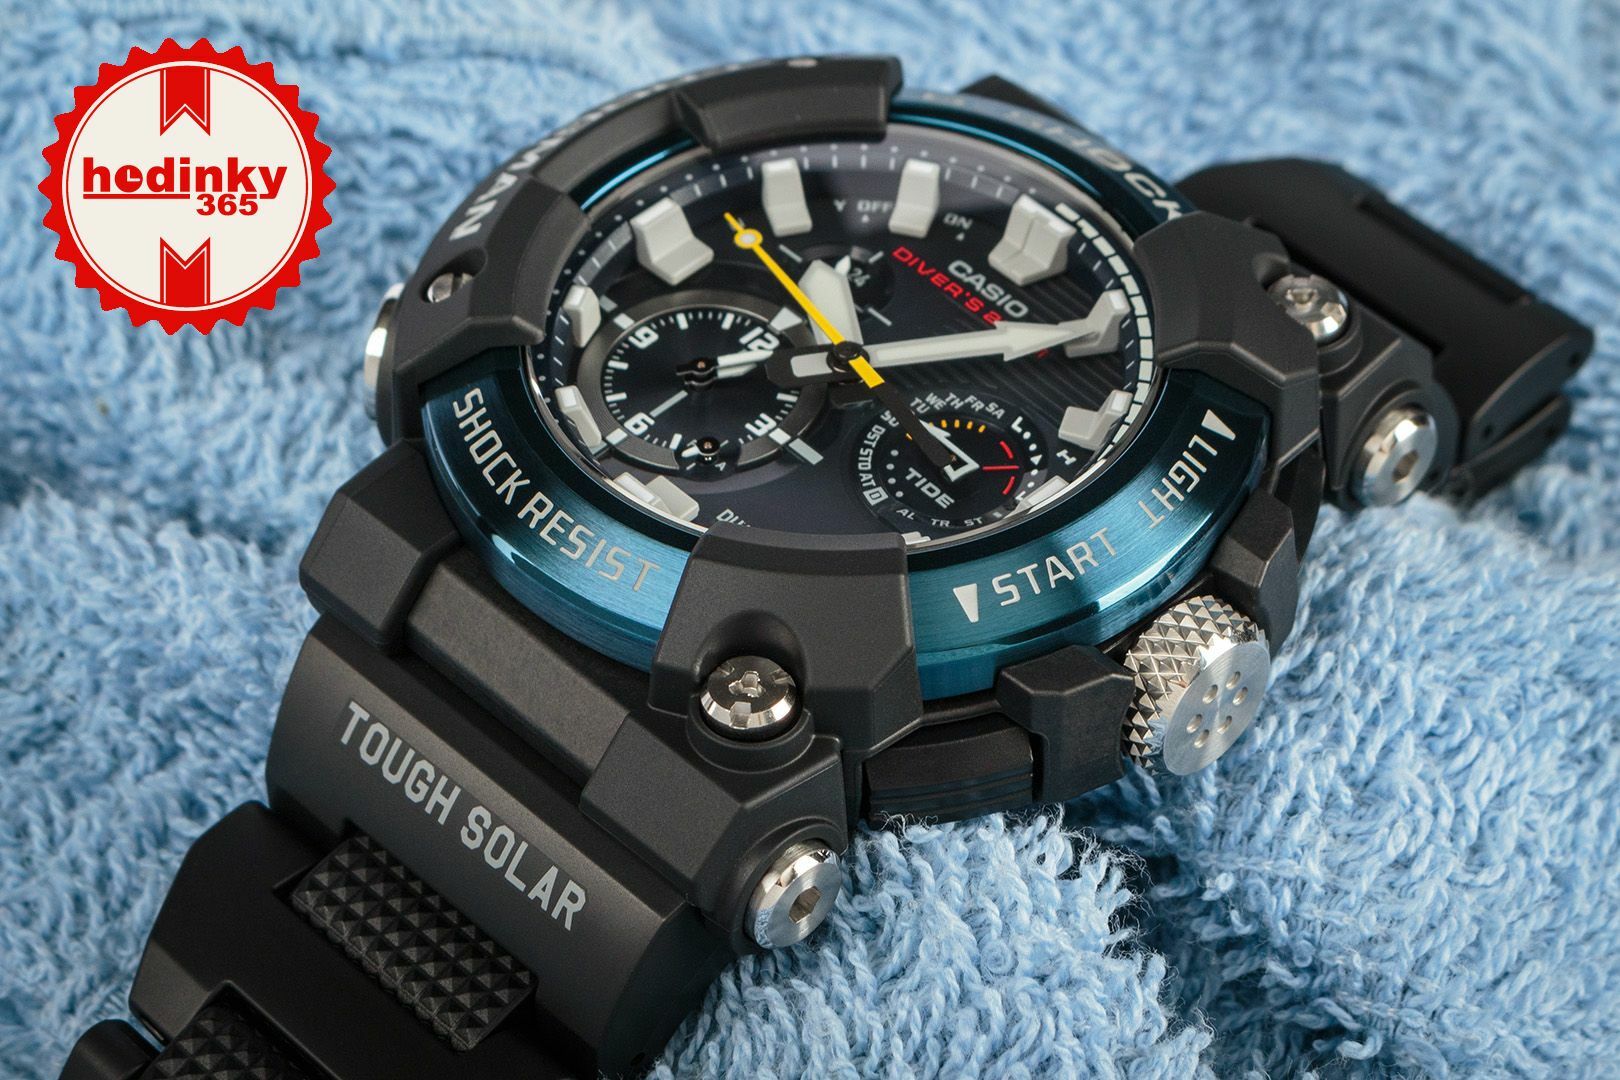 Casio G-Shock Frogman Diver's GWF-A1000C-1AER Carbon Core Guard |  Hodinky-365.com